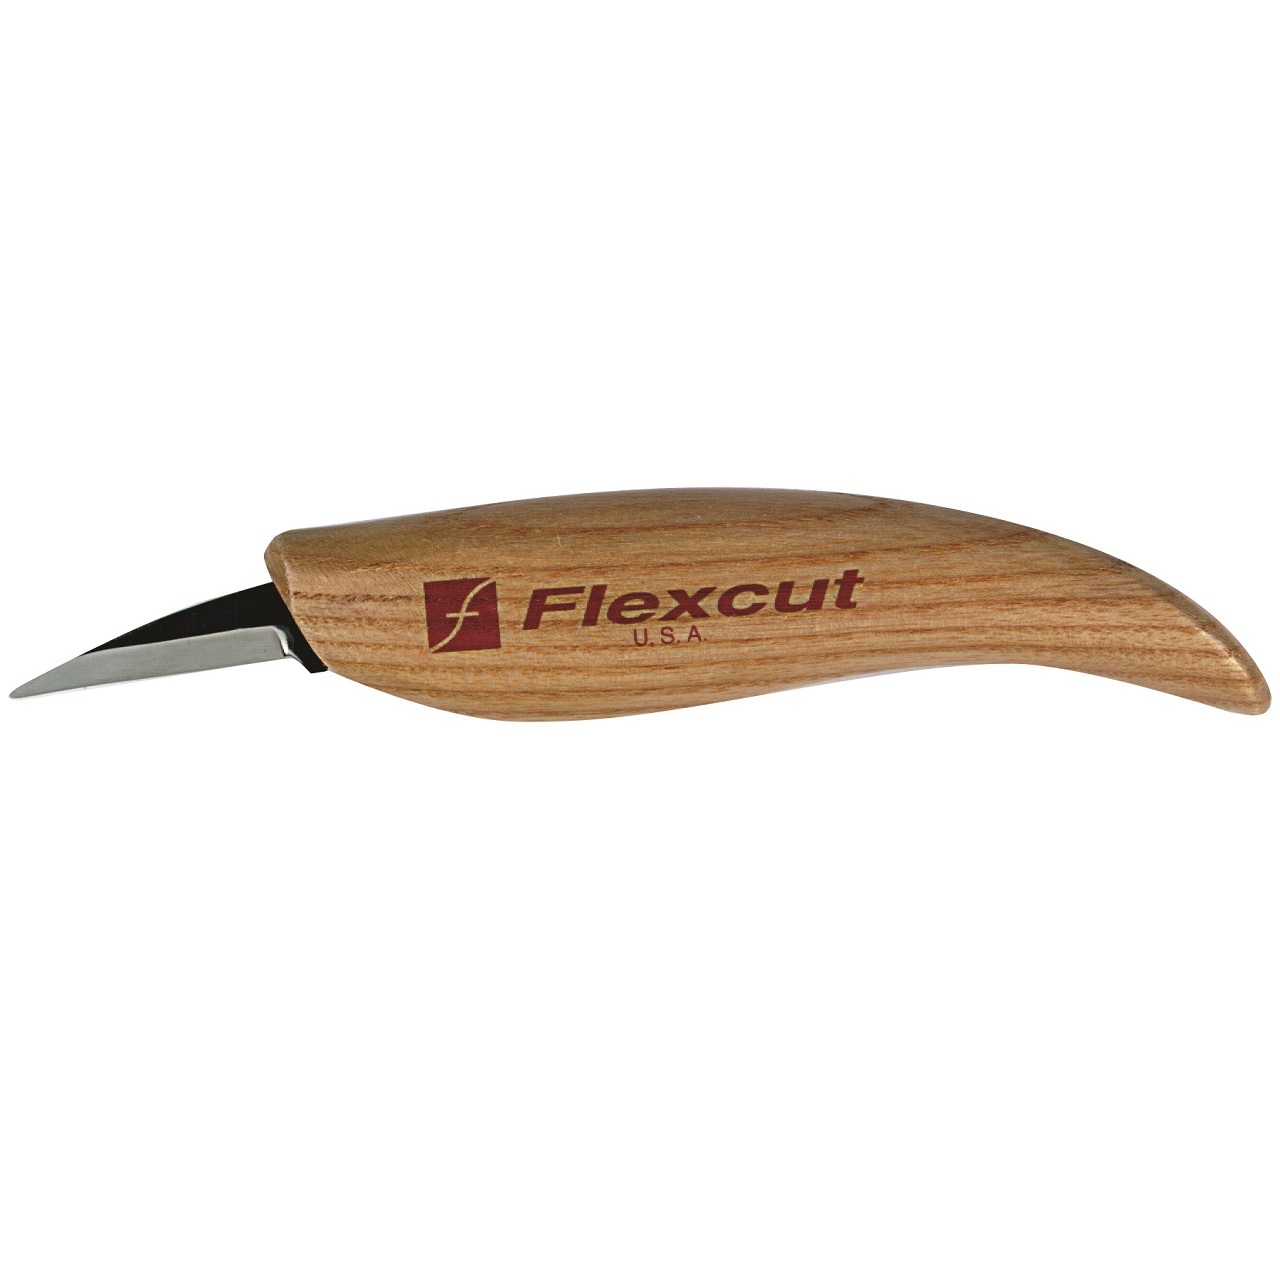 Flexcut Mallet Starter Set - 6 Piece